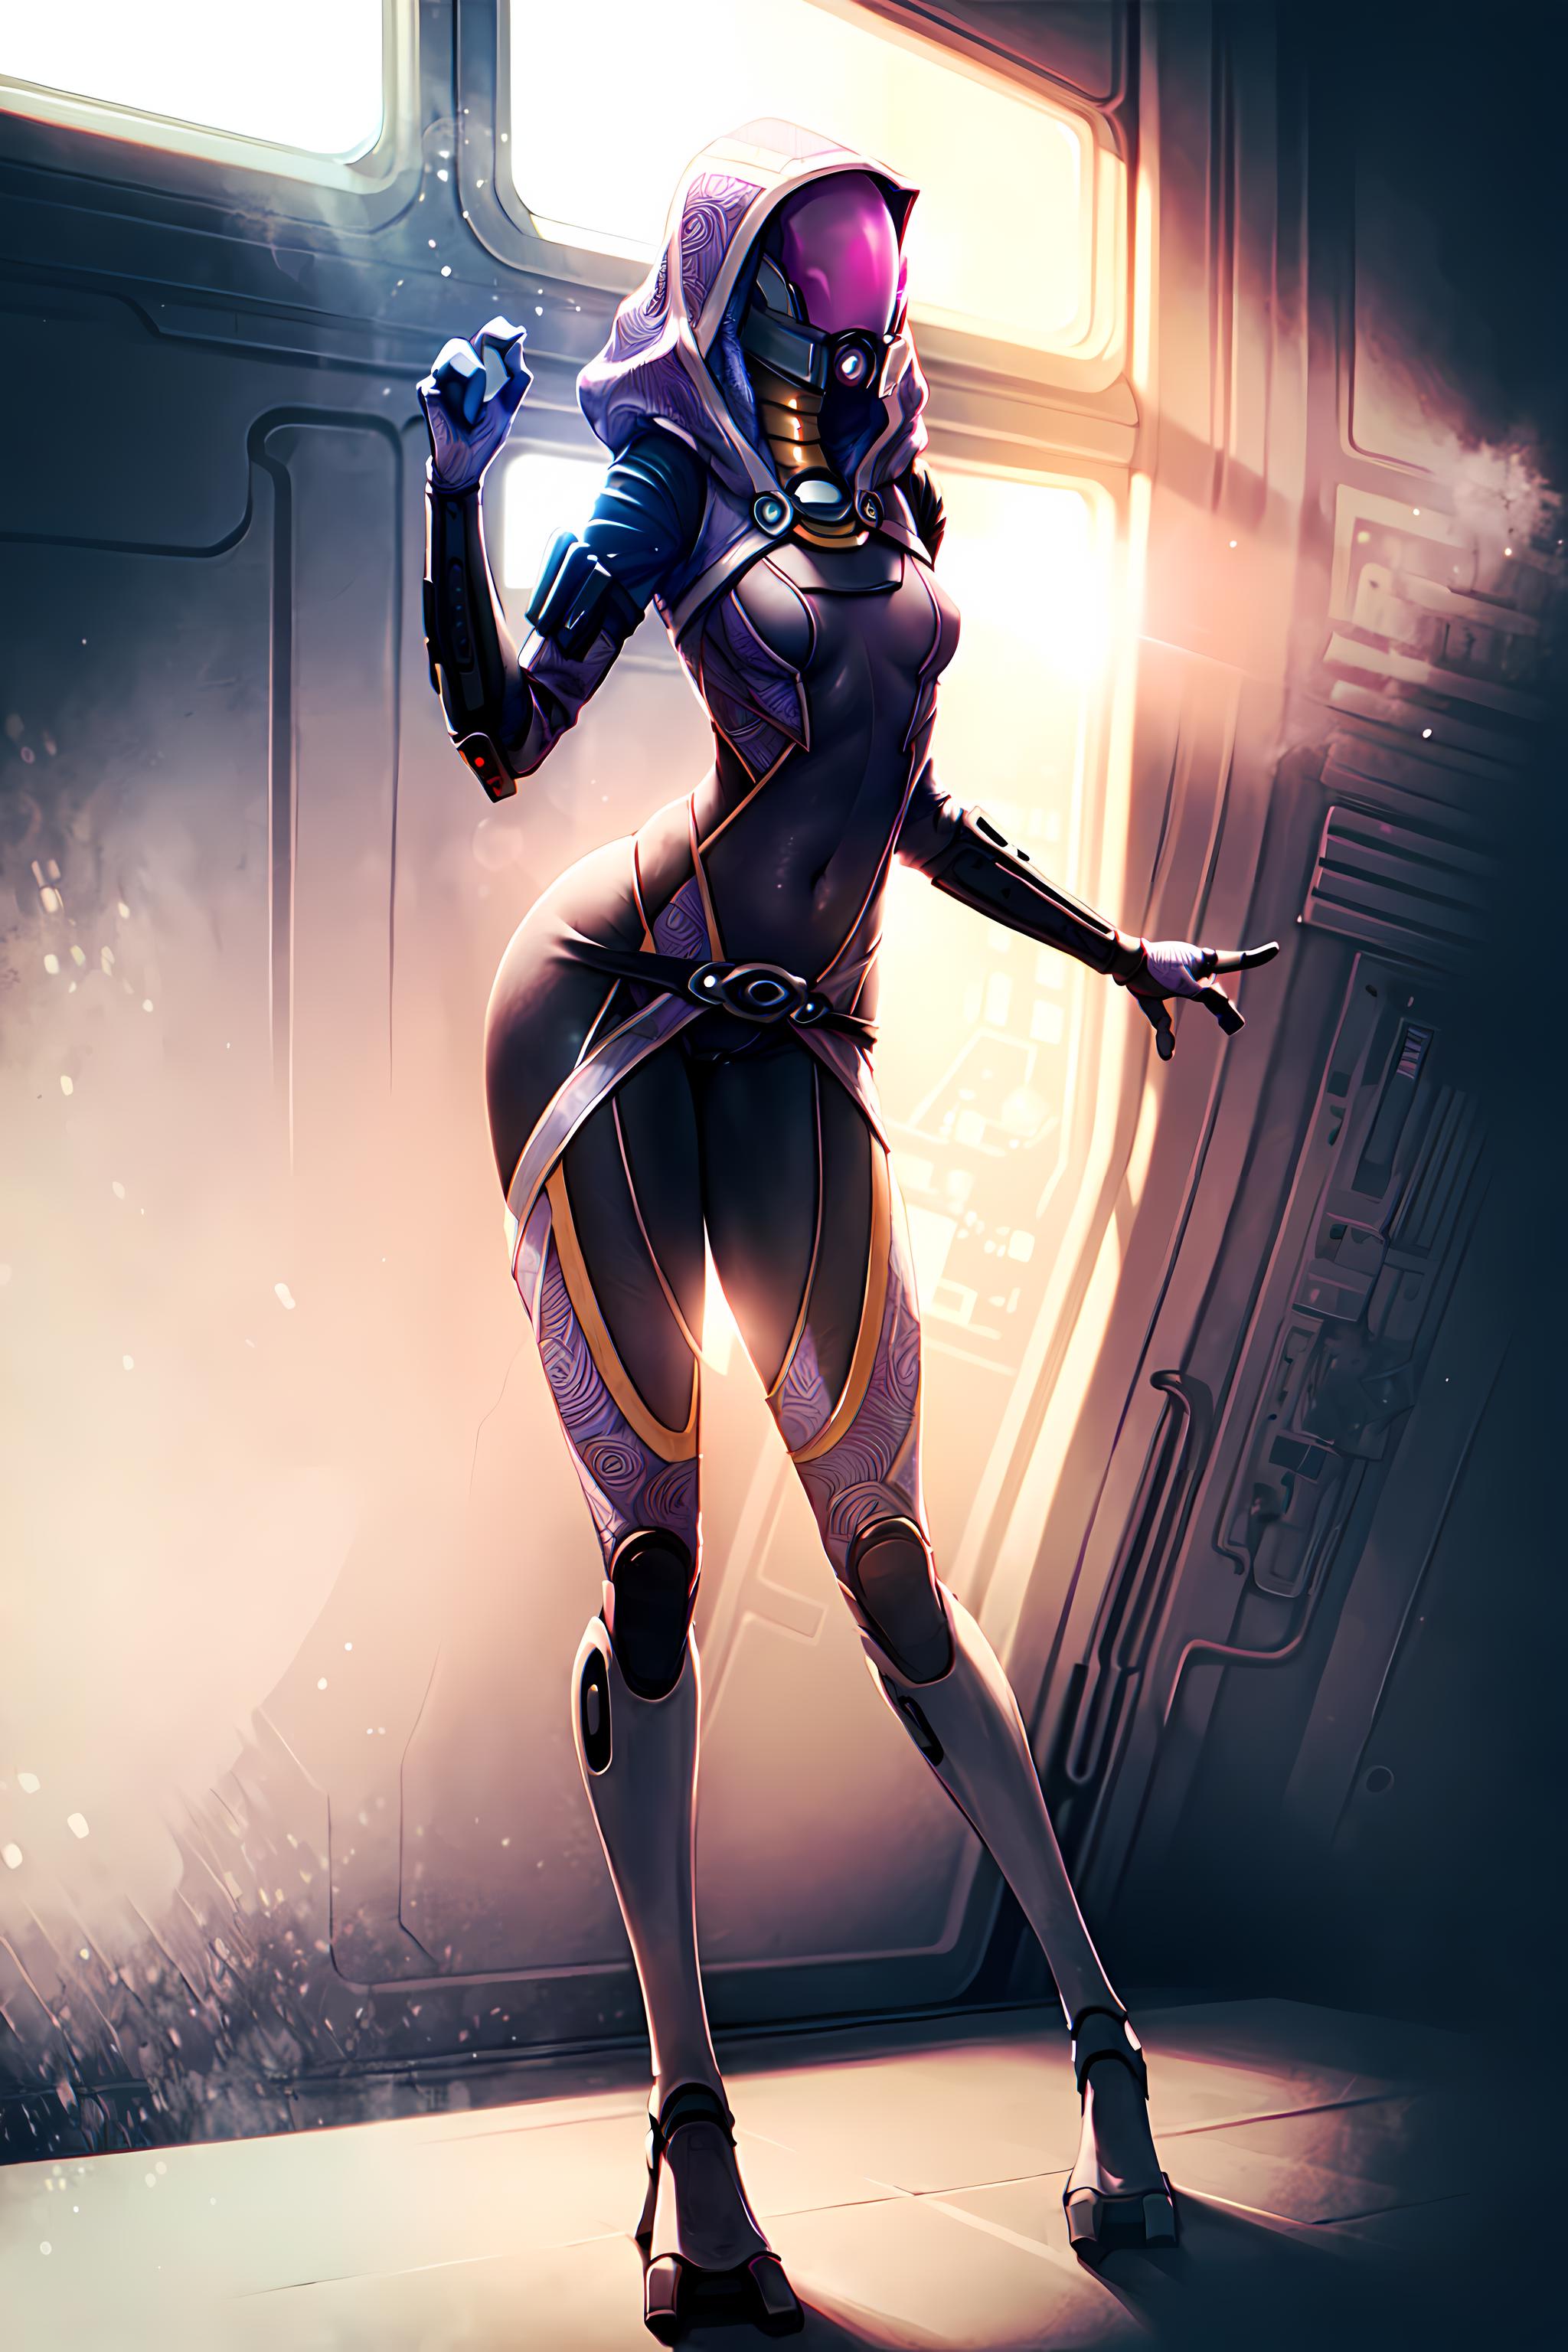 Tali'Zorah - Mass Effect image by r3b311i0n